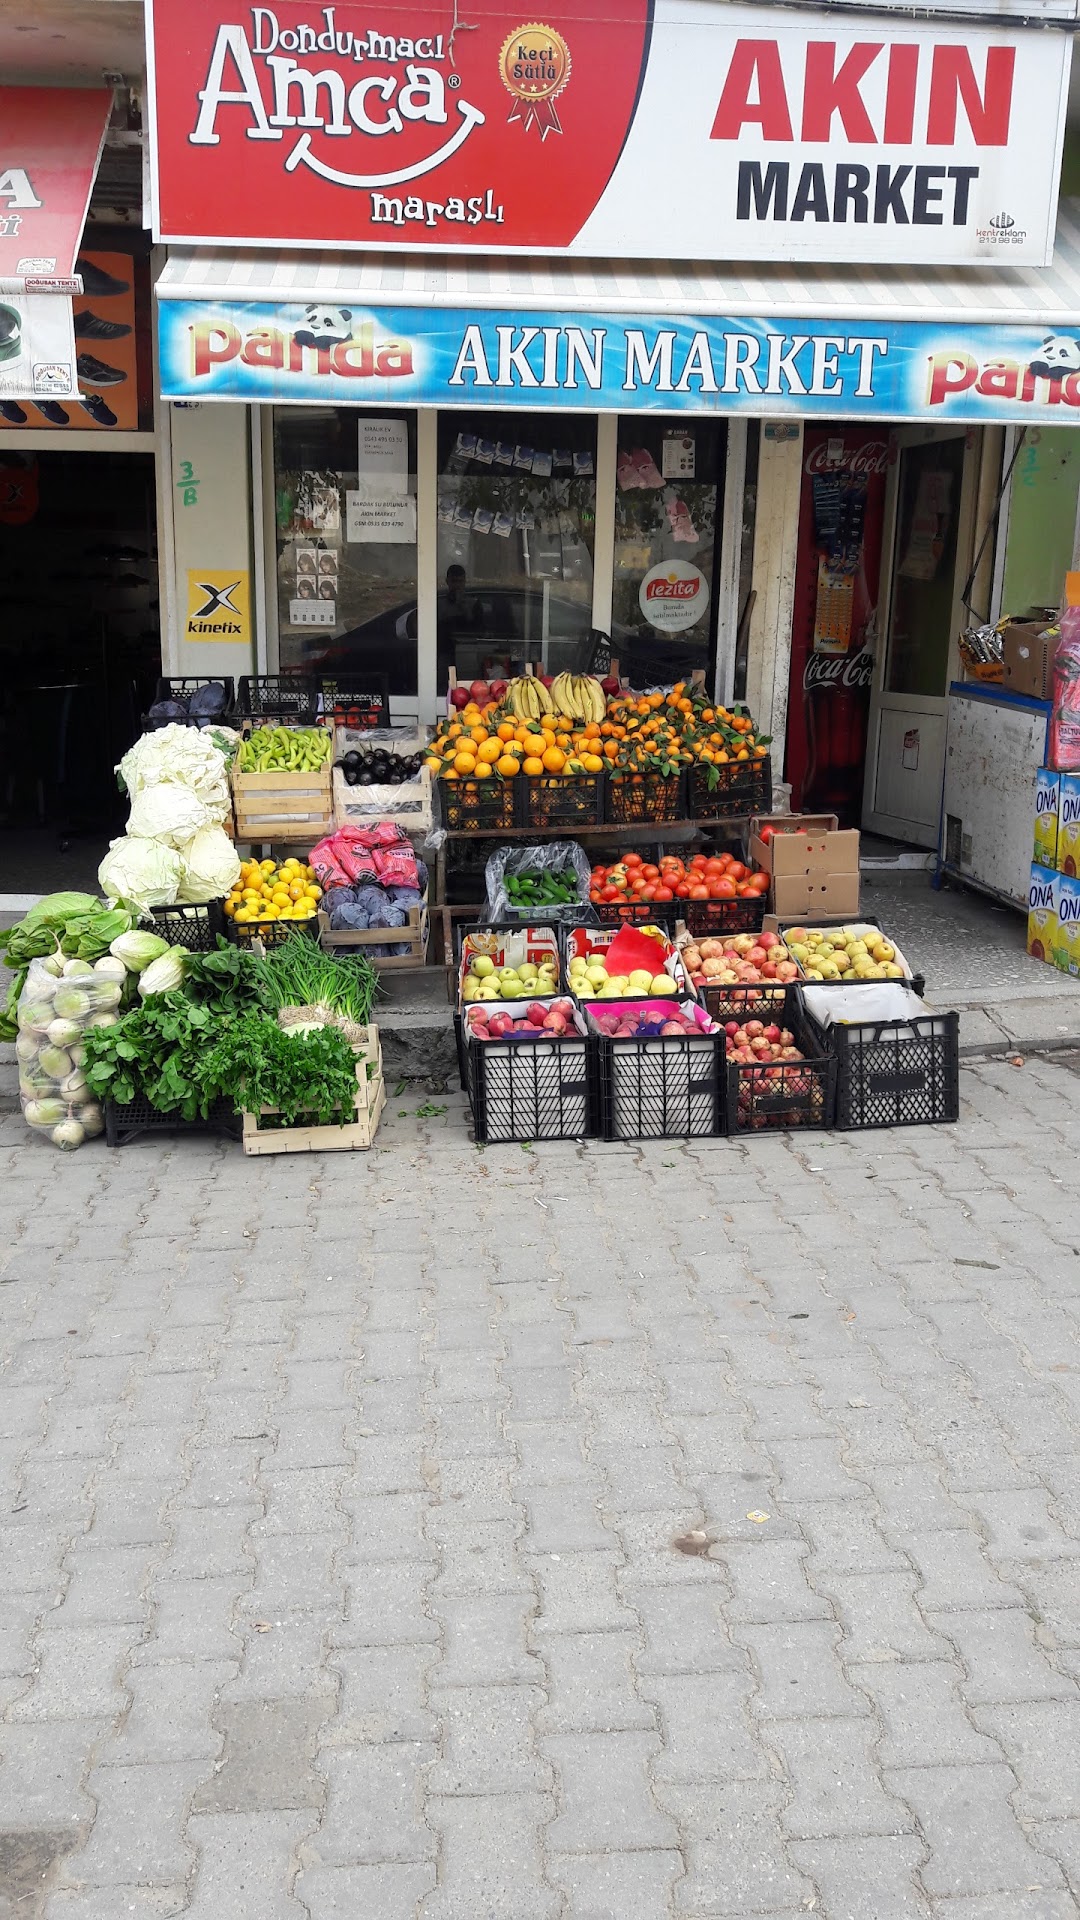 Akn Market